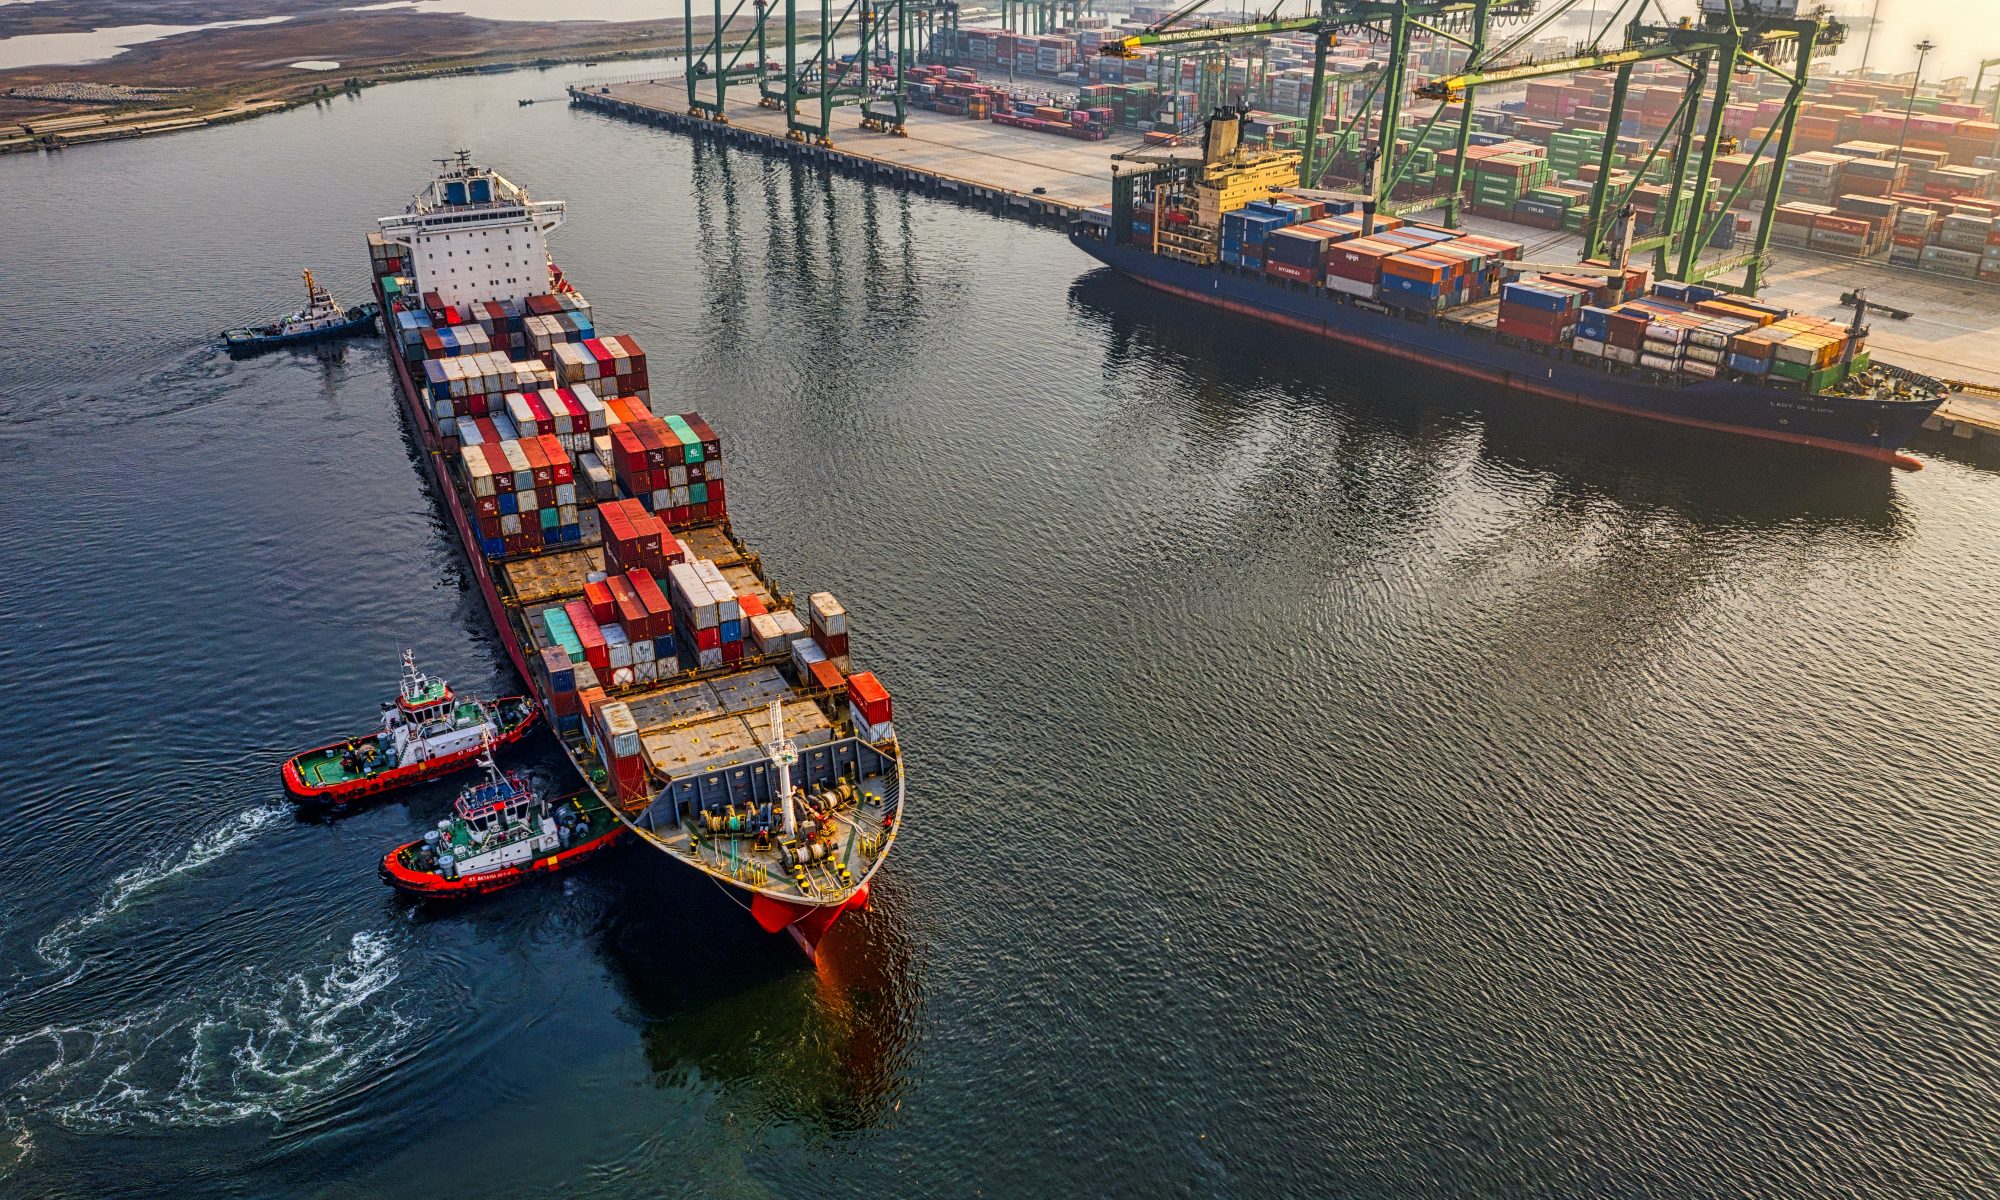 An image showing a cargo ship near a port